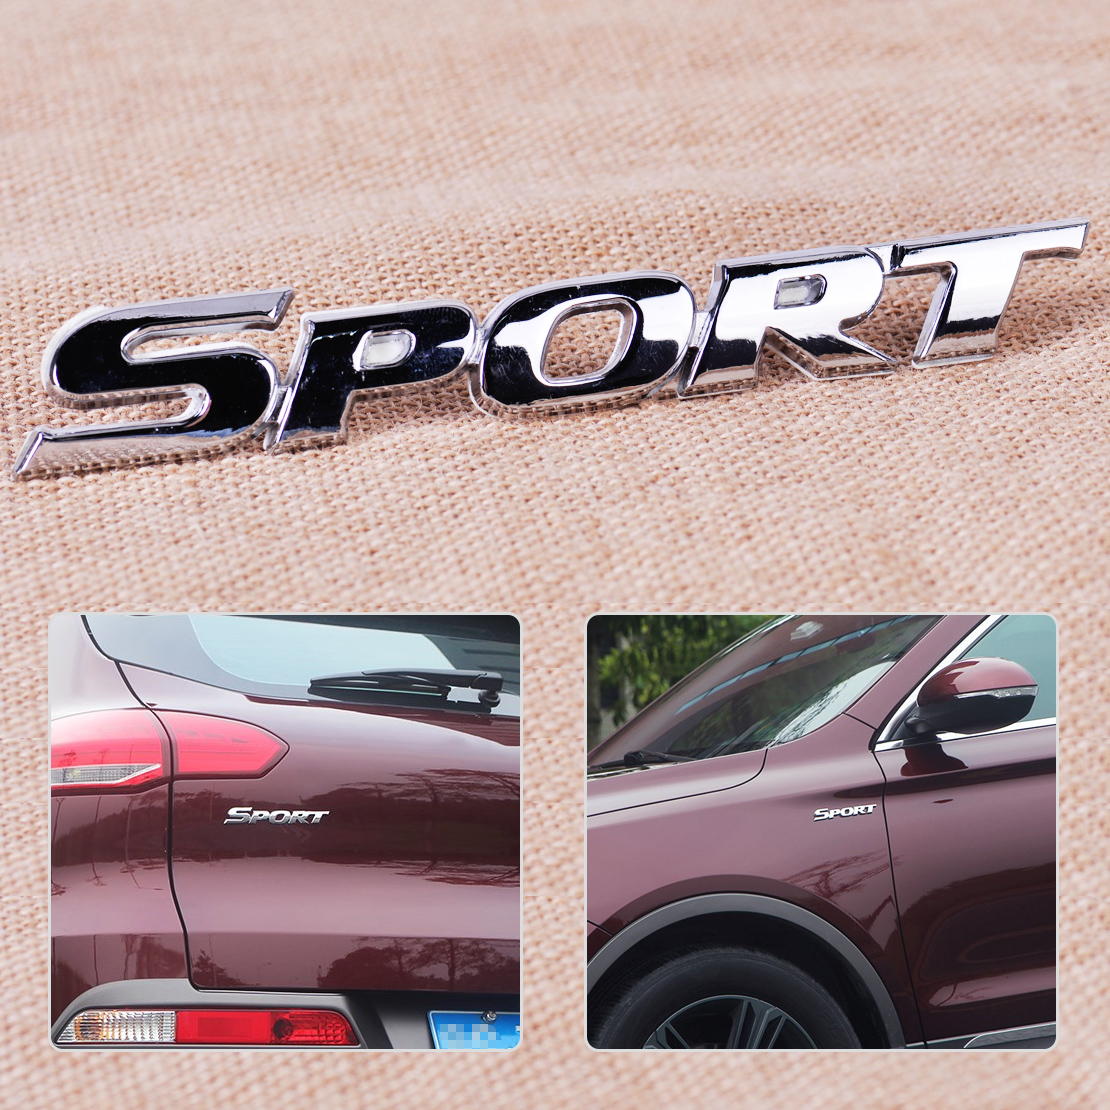 Hot Sports Word letter 3D Chrome metal Car Sticker Emblem Badge Decal Auto Decor